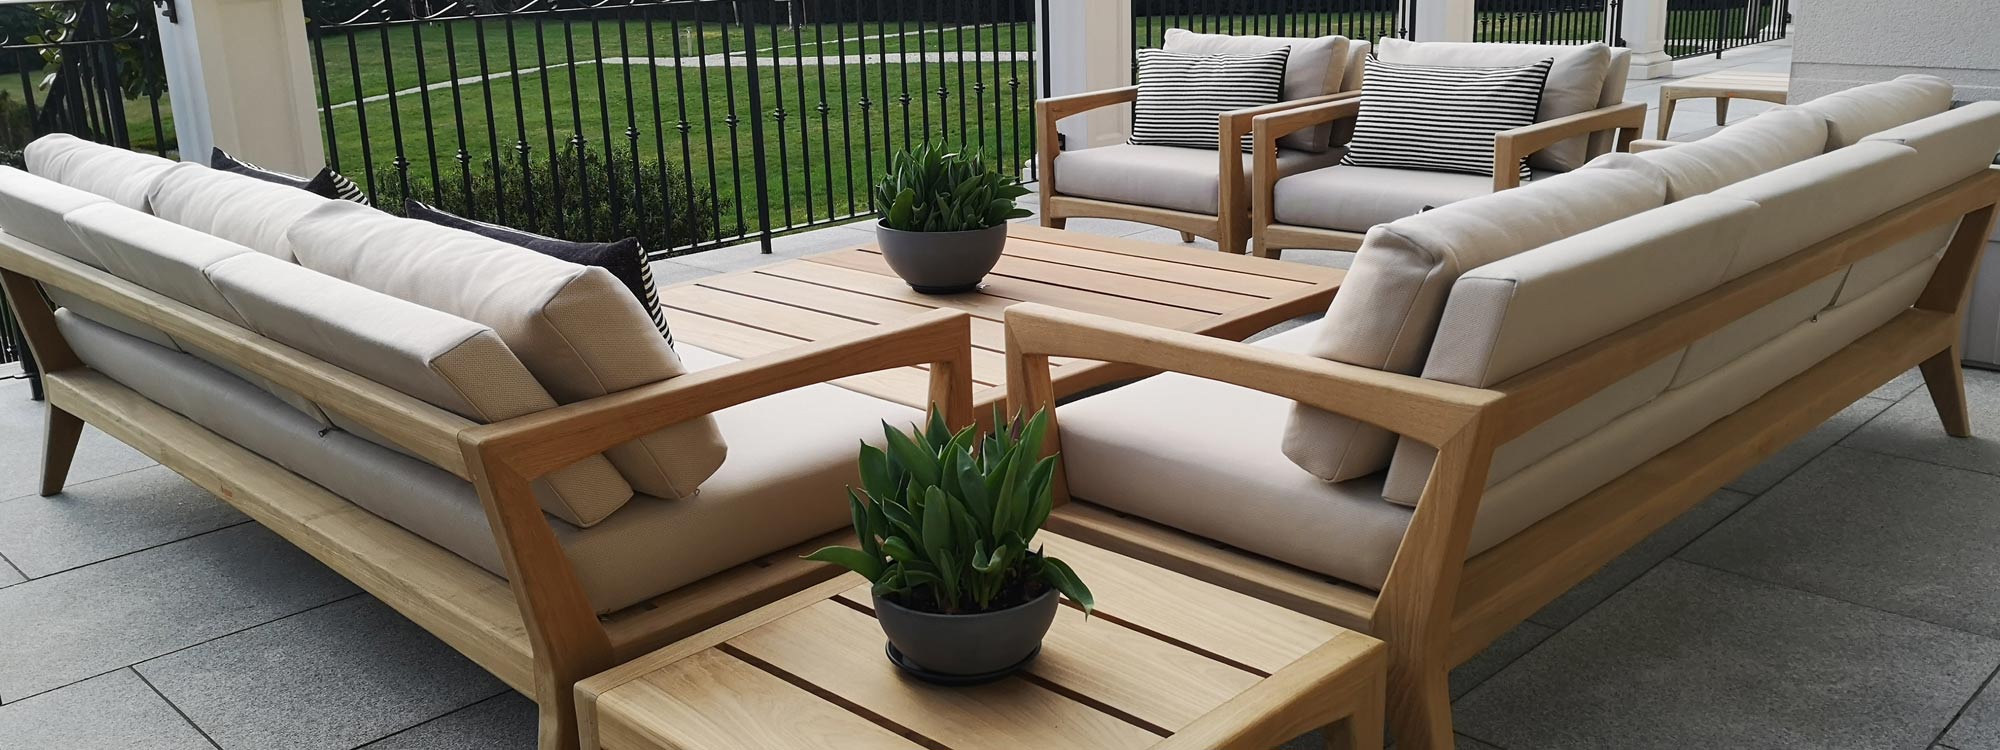 Image of Zenhit modern garden furniture by Royal Botania in Ascot, Berkshire